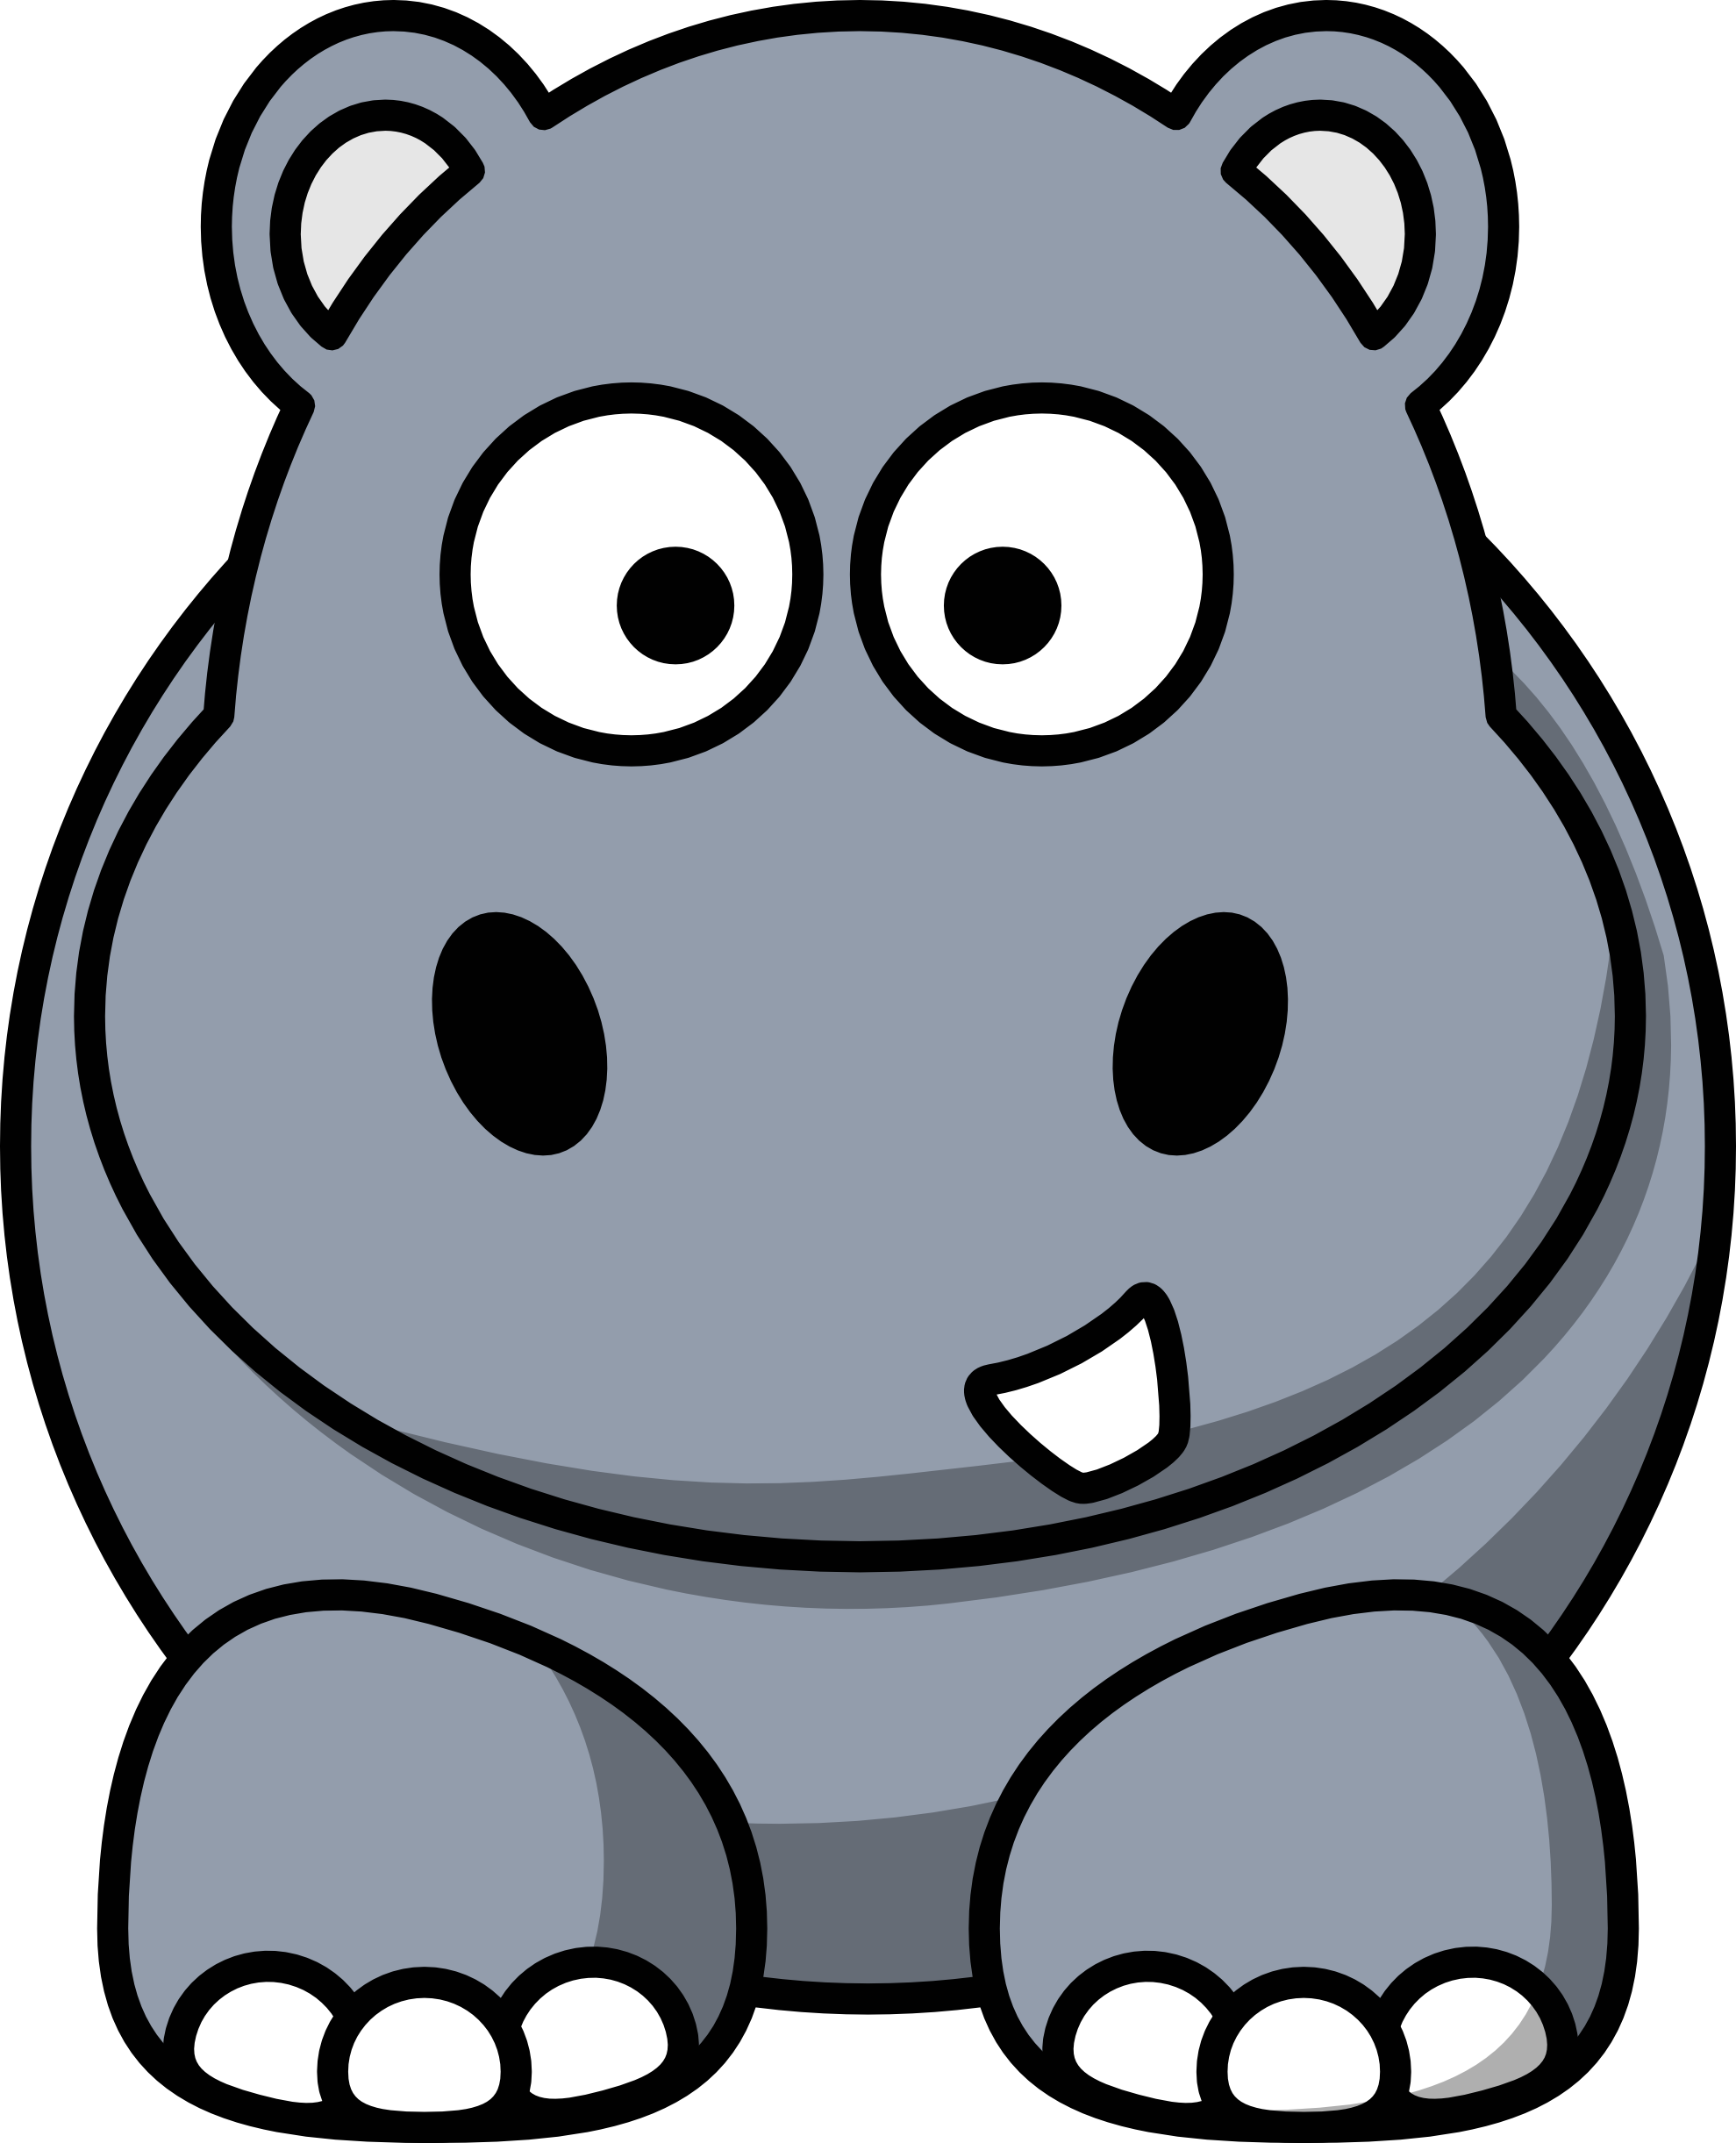 Hippo vector graphics clipart